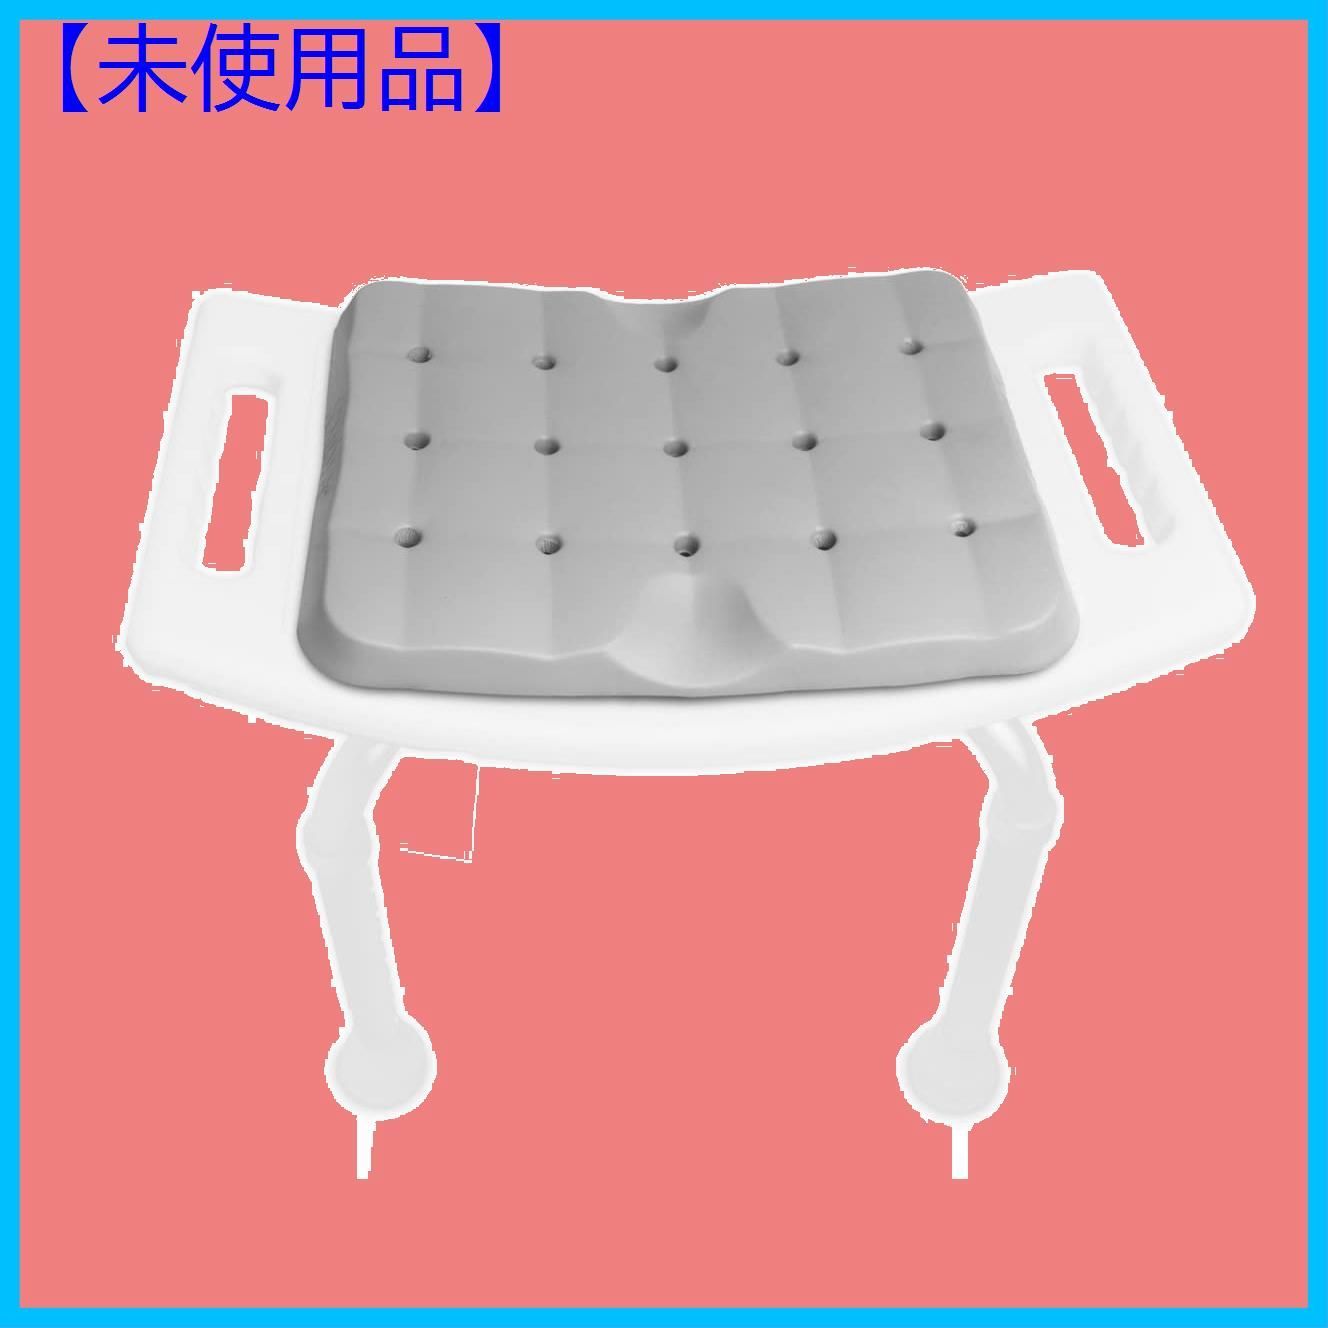 KMINA - シャワーいす用クッション (35x27x3 センチ、椅子なし)、